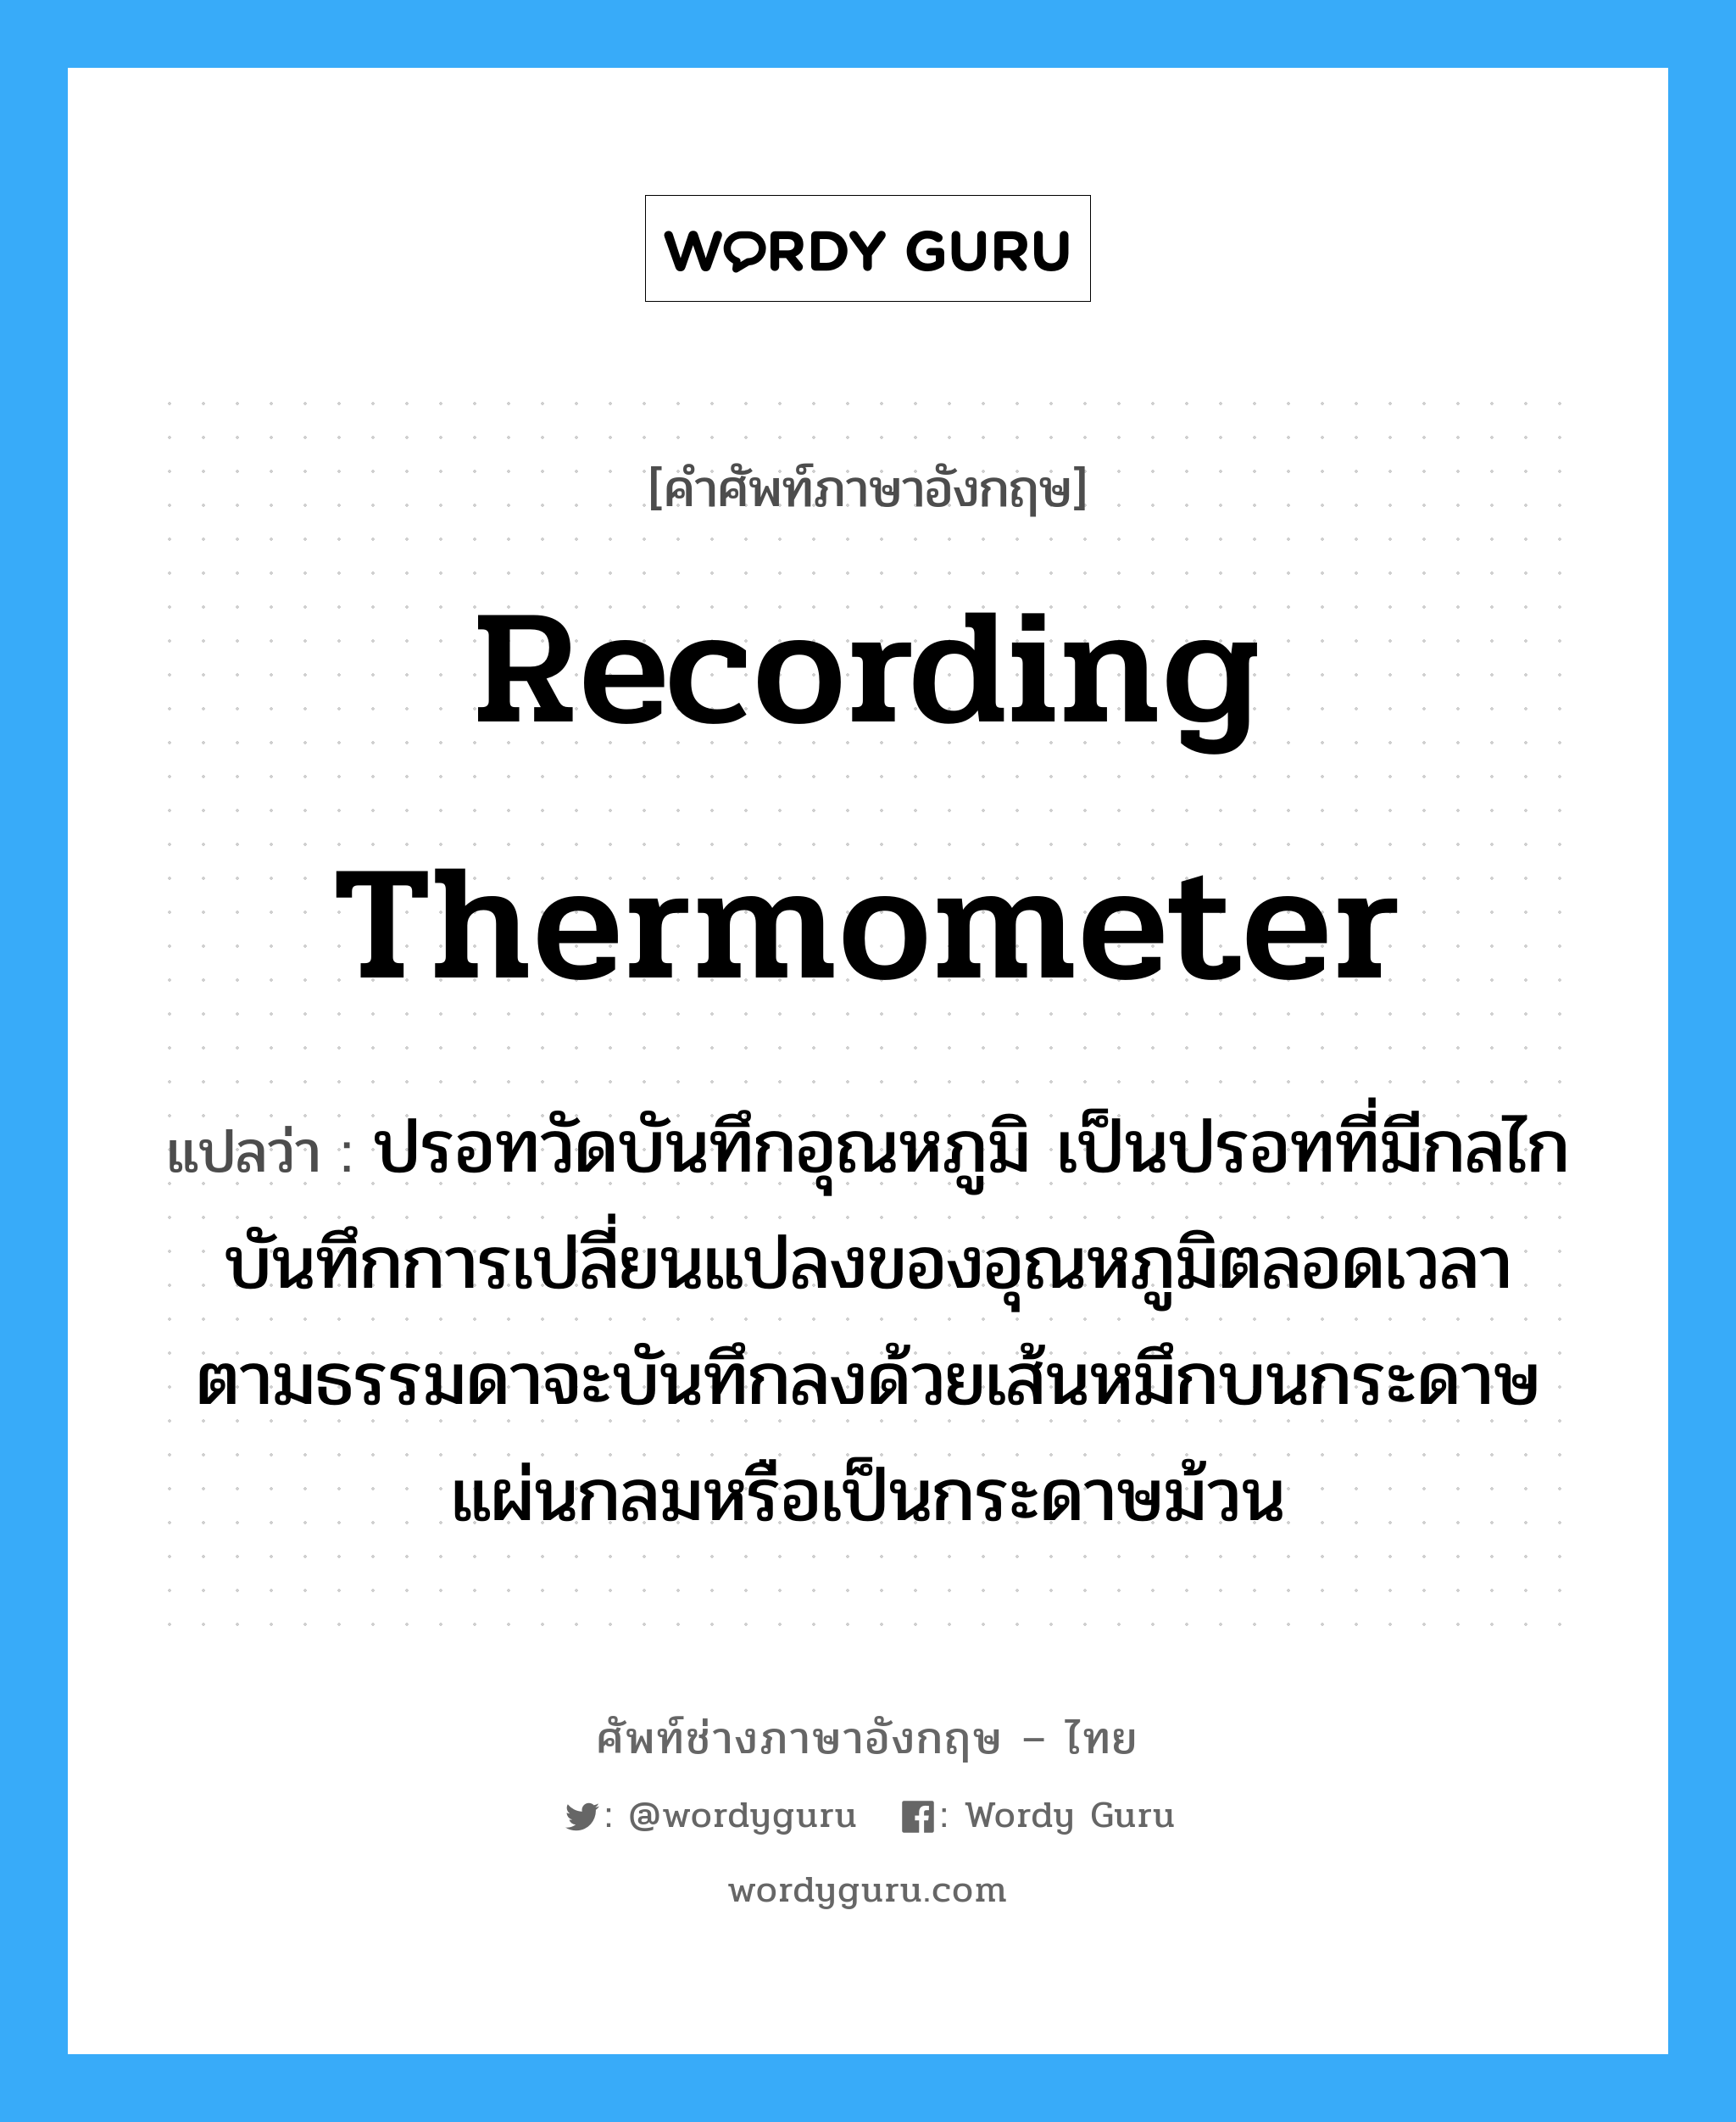 recording thermometer แปลว่า?, คำศัพท์ช่างภาษาอังกฤษ - ไทย recording thermometer คำศัพท์ภาษาอังกฤษ recording thermometer แปลว่า ปรอทวัดบันทึกอุณหภูมิ เป็นปรอทที่มีกลไกบันทึกการเปลี่ยนแปลงของอุณหภูมิตลอดเวลา ตามธรรมดาจะบันทึกลงด้วยเส้นหมึกบนกระดาษแผ่นกลมหรือเป็นกระดาษม้วน